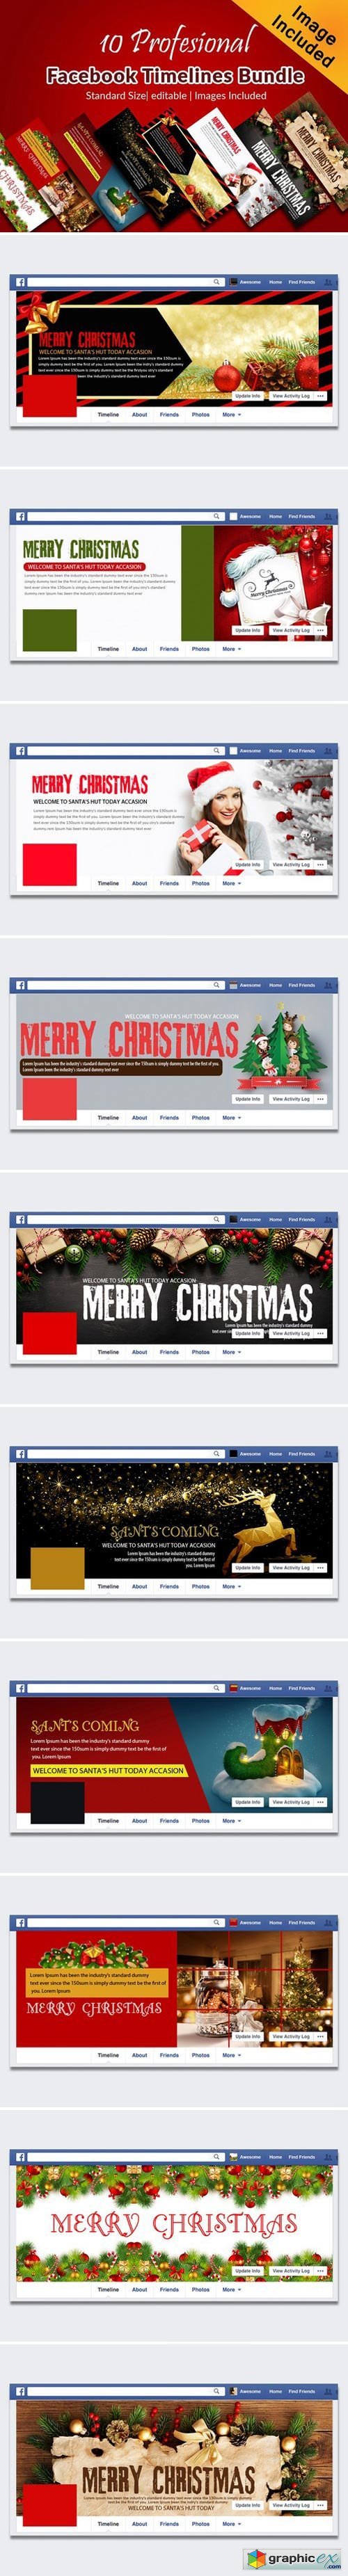 10 Christmas FaceBook Cover Bundle